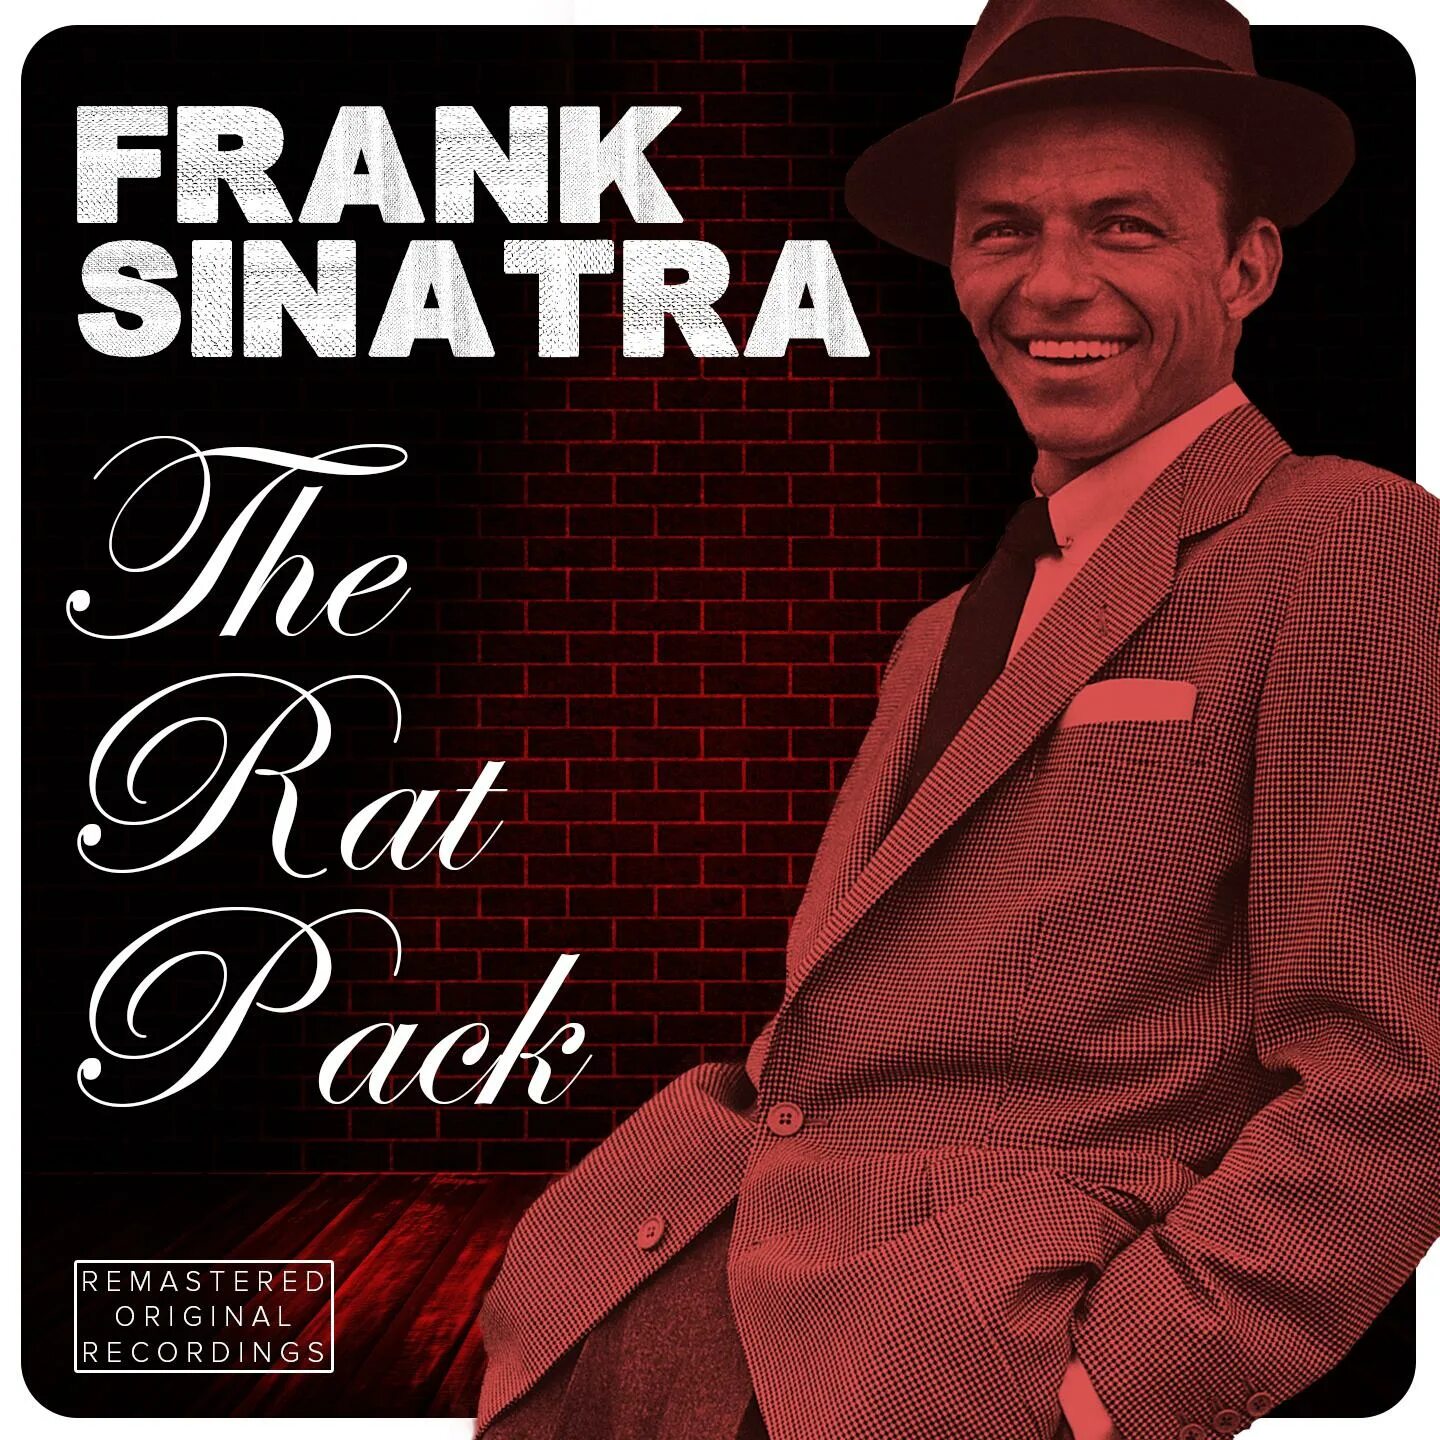 Фрэнк синатра терминатор 2. Frank Sinatra album. Фрэнк Синатра альбомы. Jerome Sinatra. Frank Sinatra album Cover.